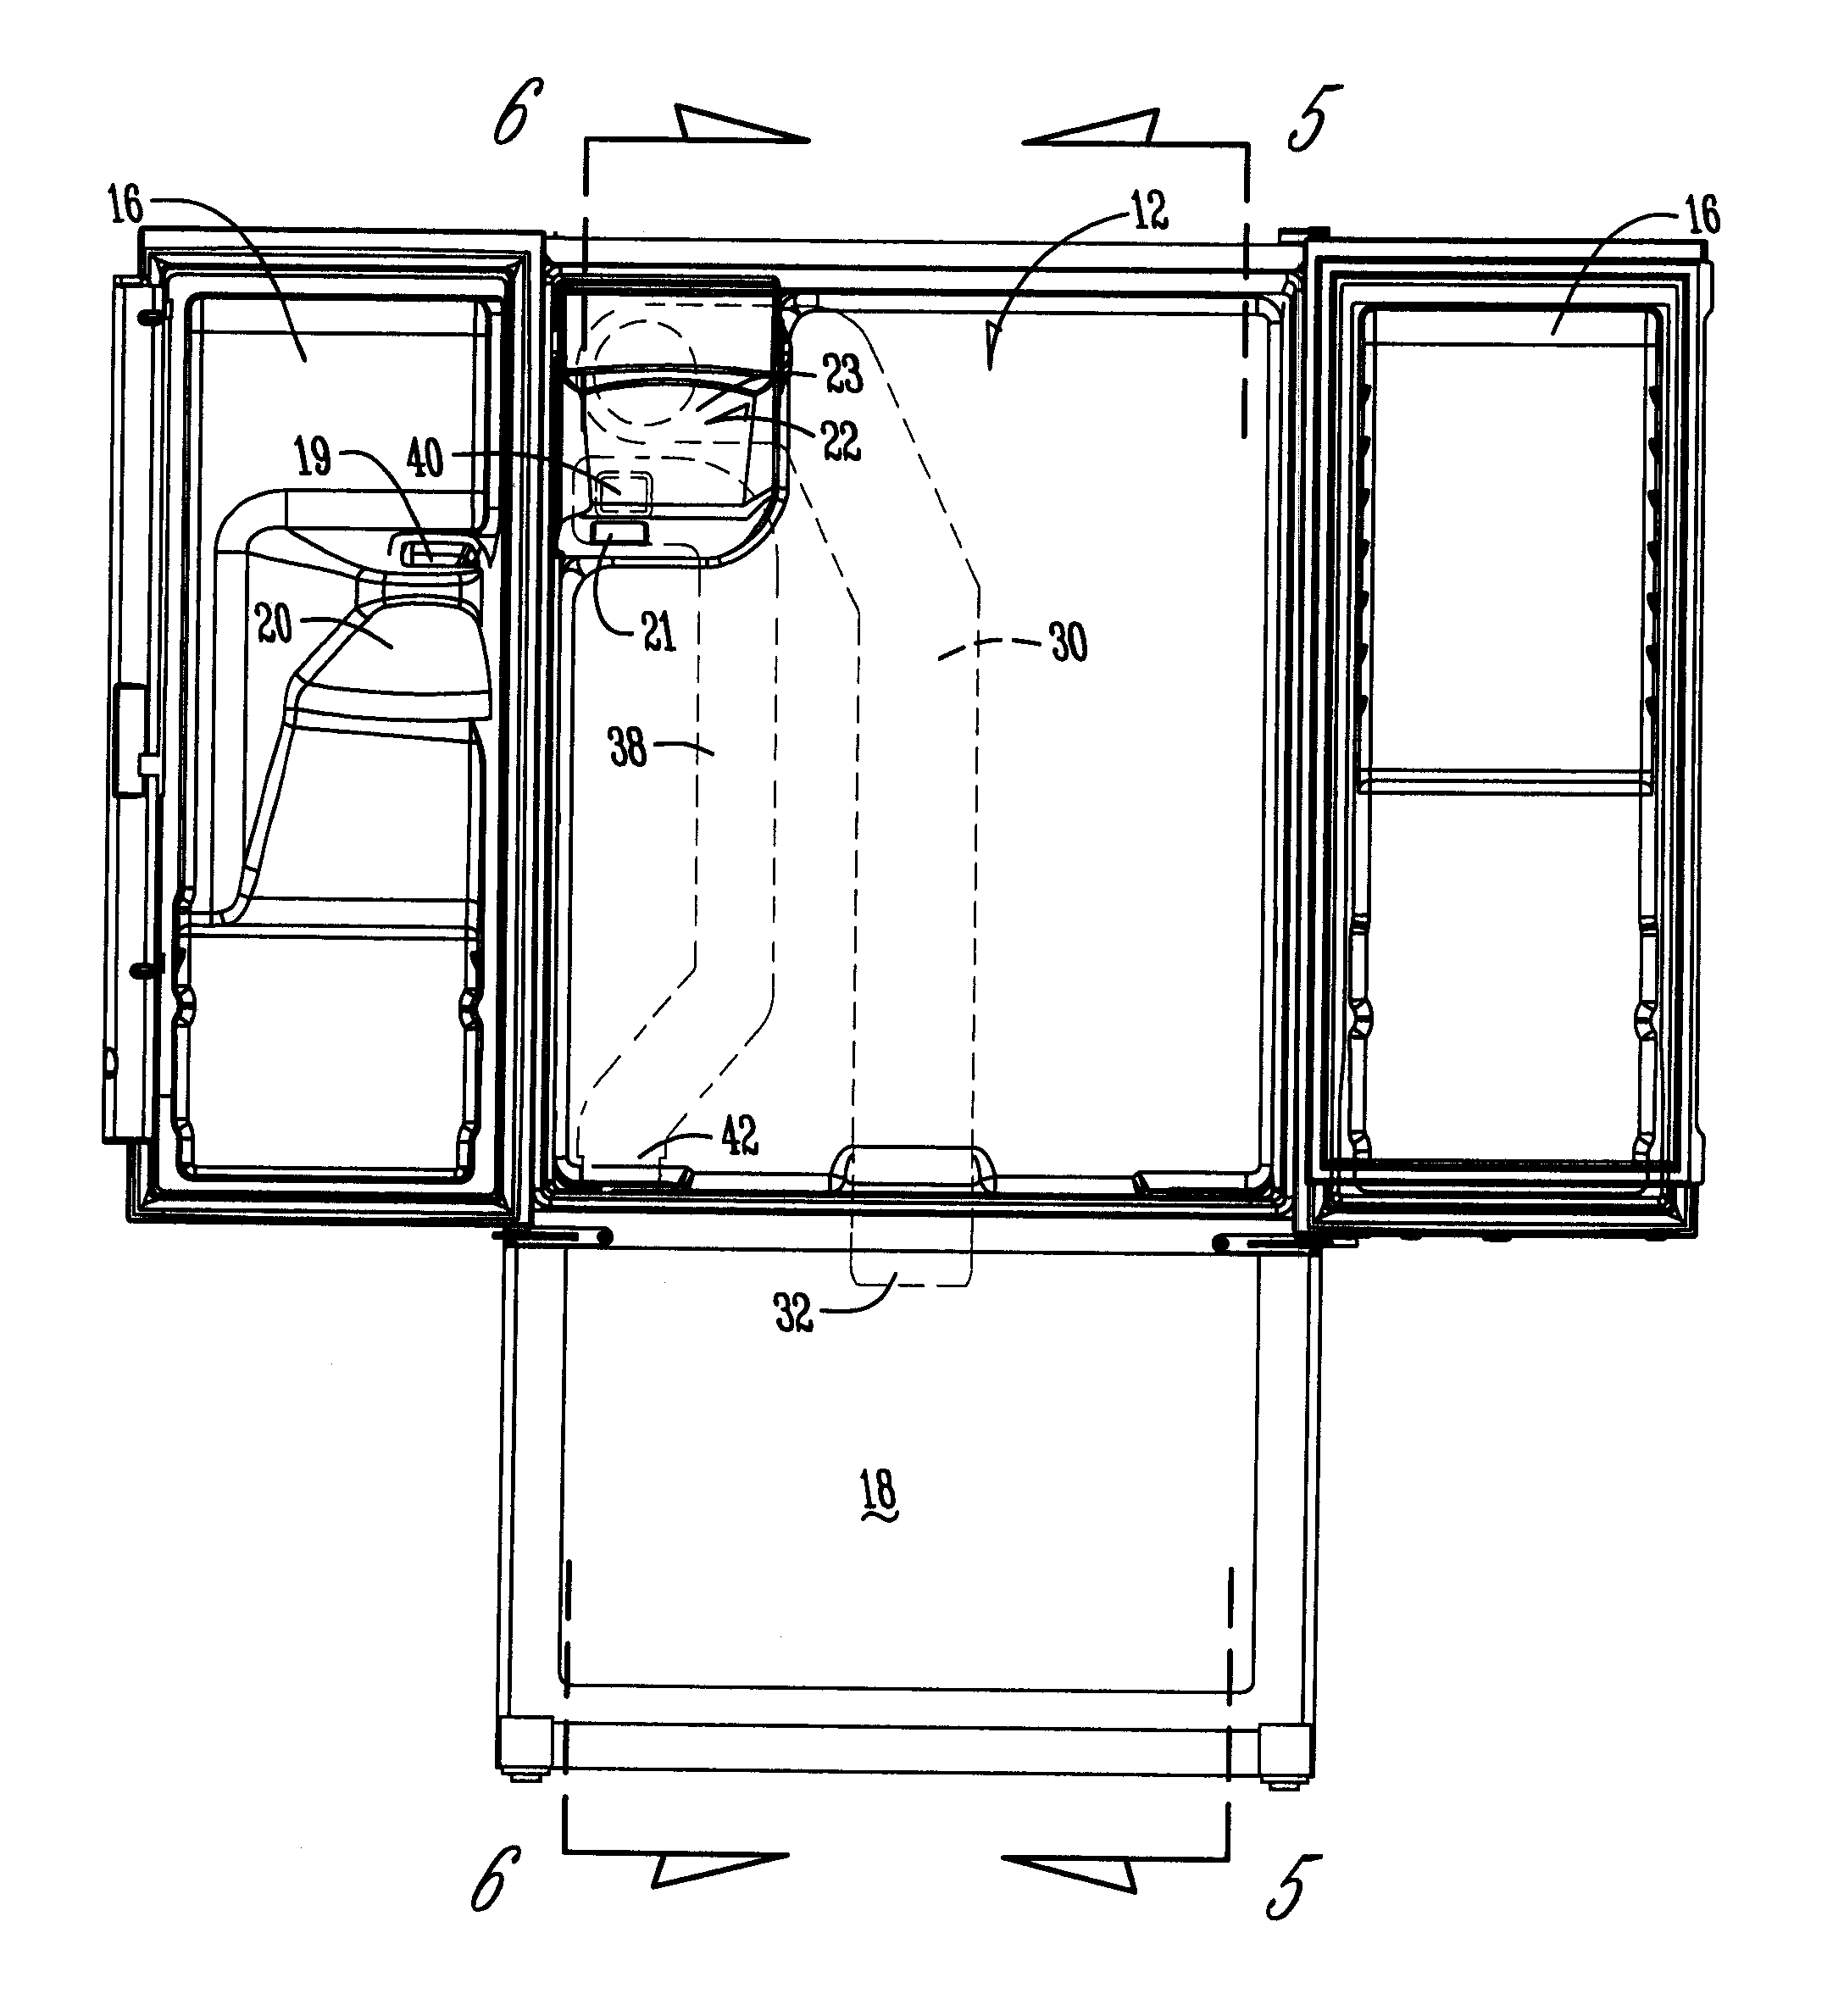 Refrigerator ice compartment with intermediate temperature